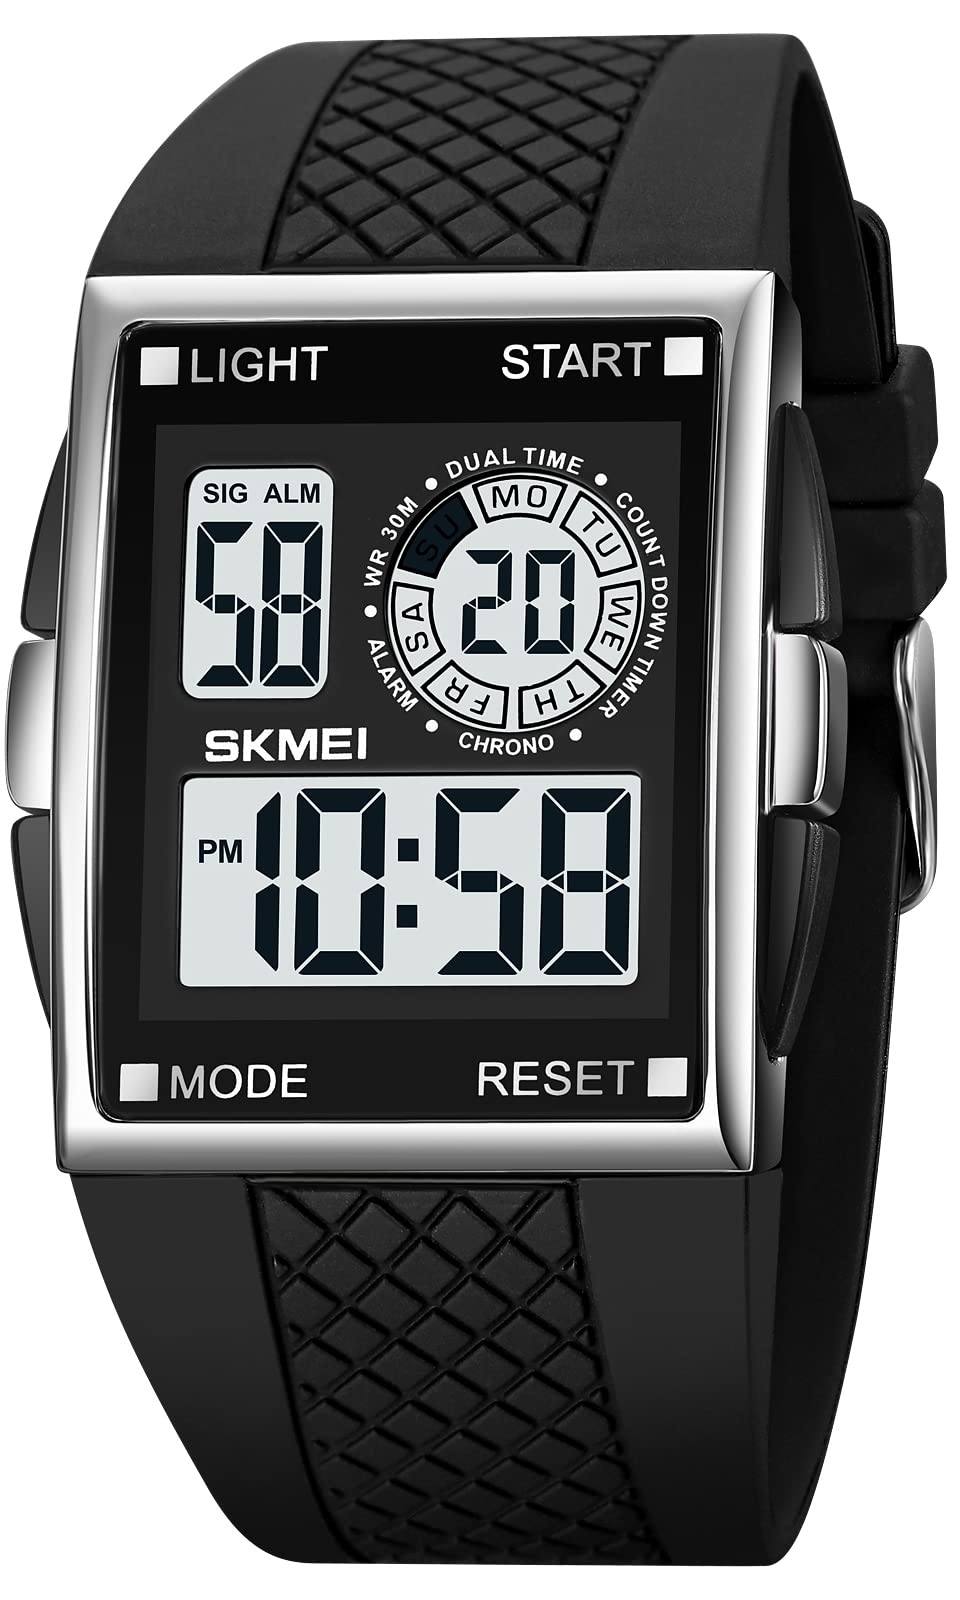 XCZAP Men's Luminous Square Digital Sports Watch Waterproof Countdown Multi-Function Watch